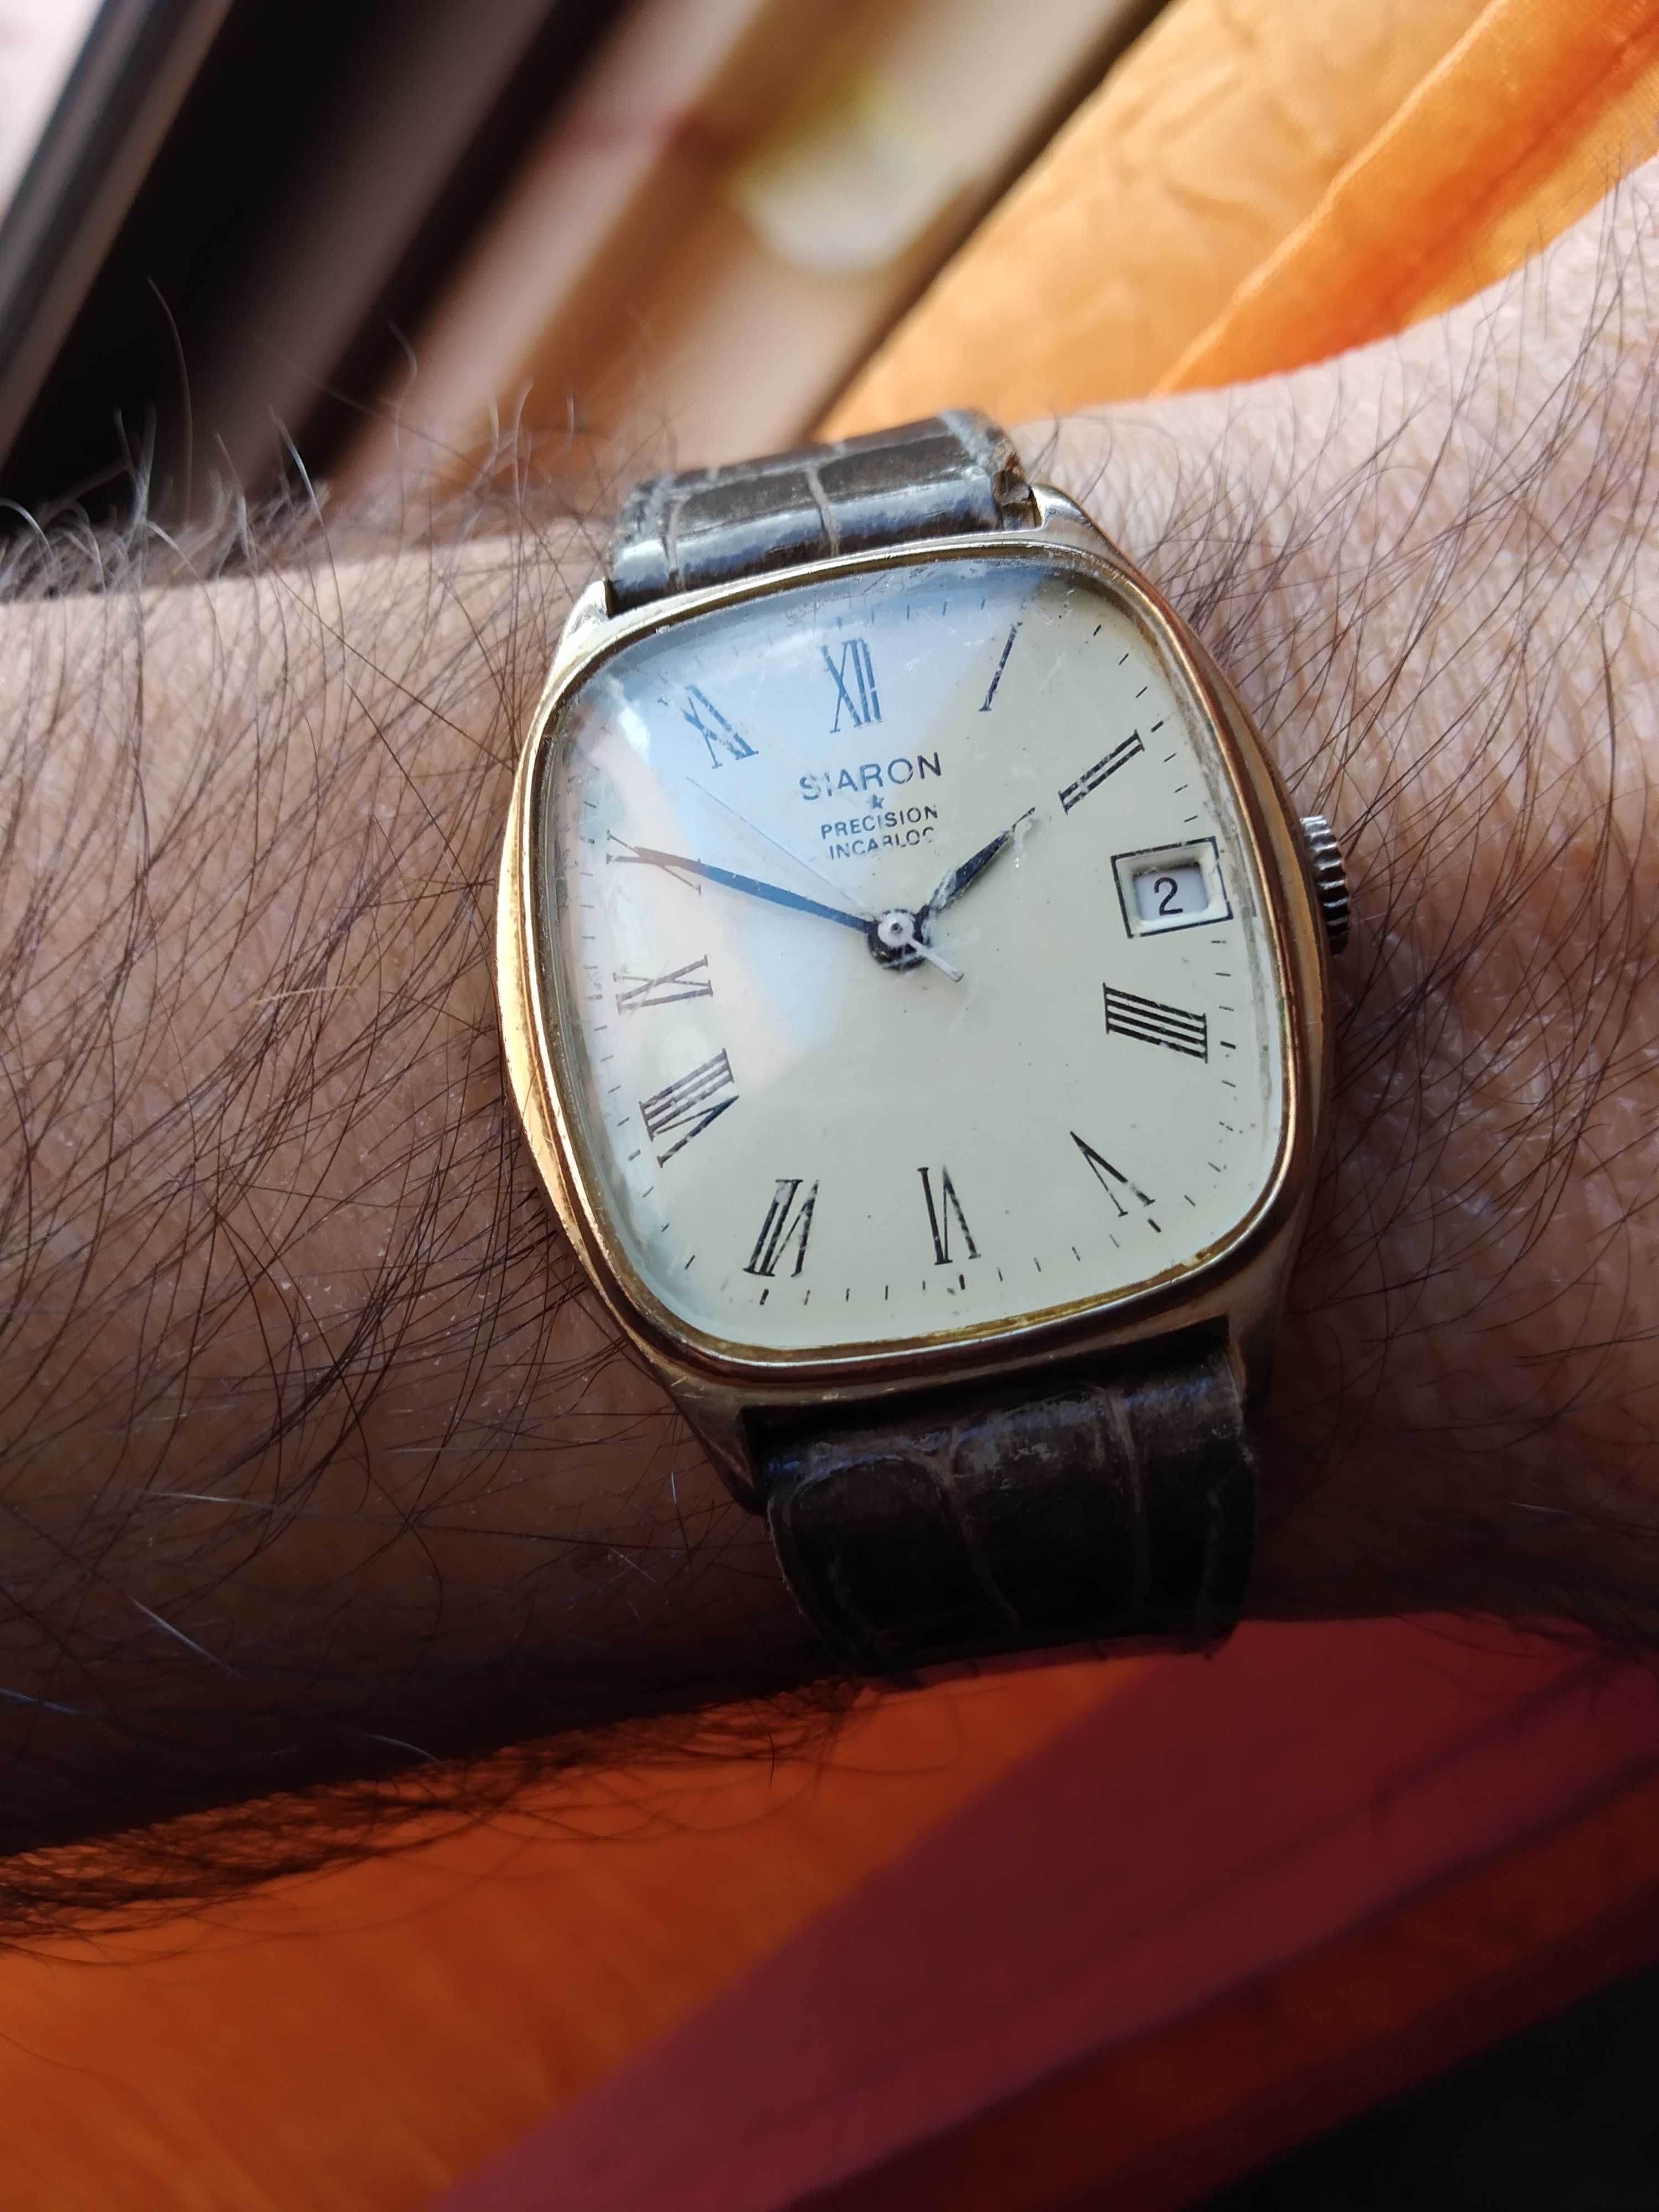 Relógio Siaron Vintage